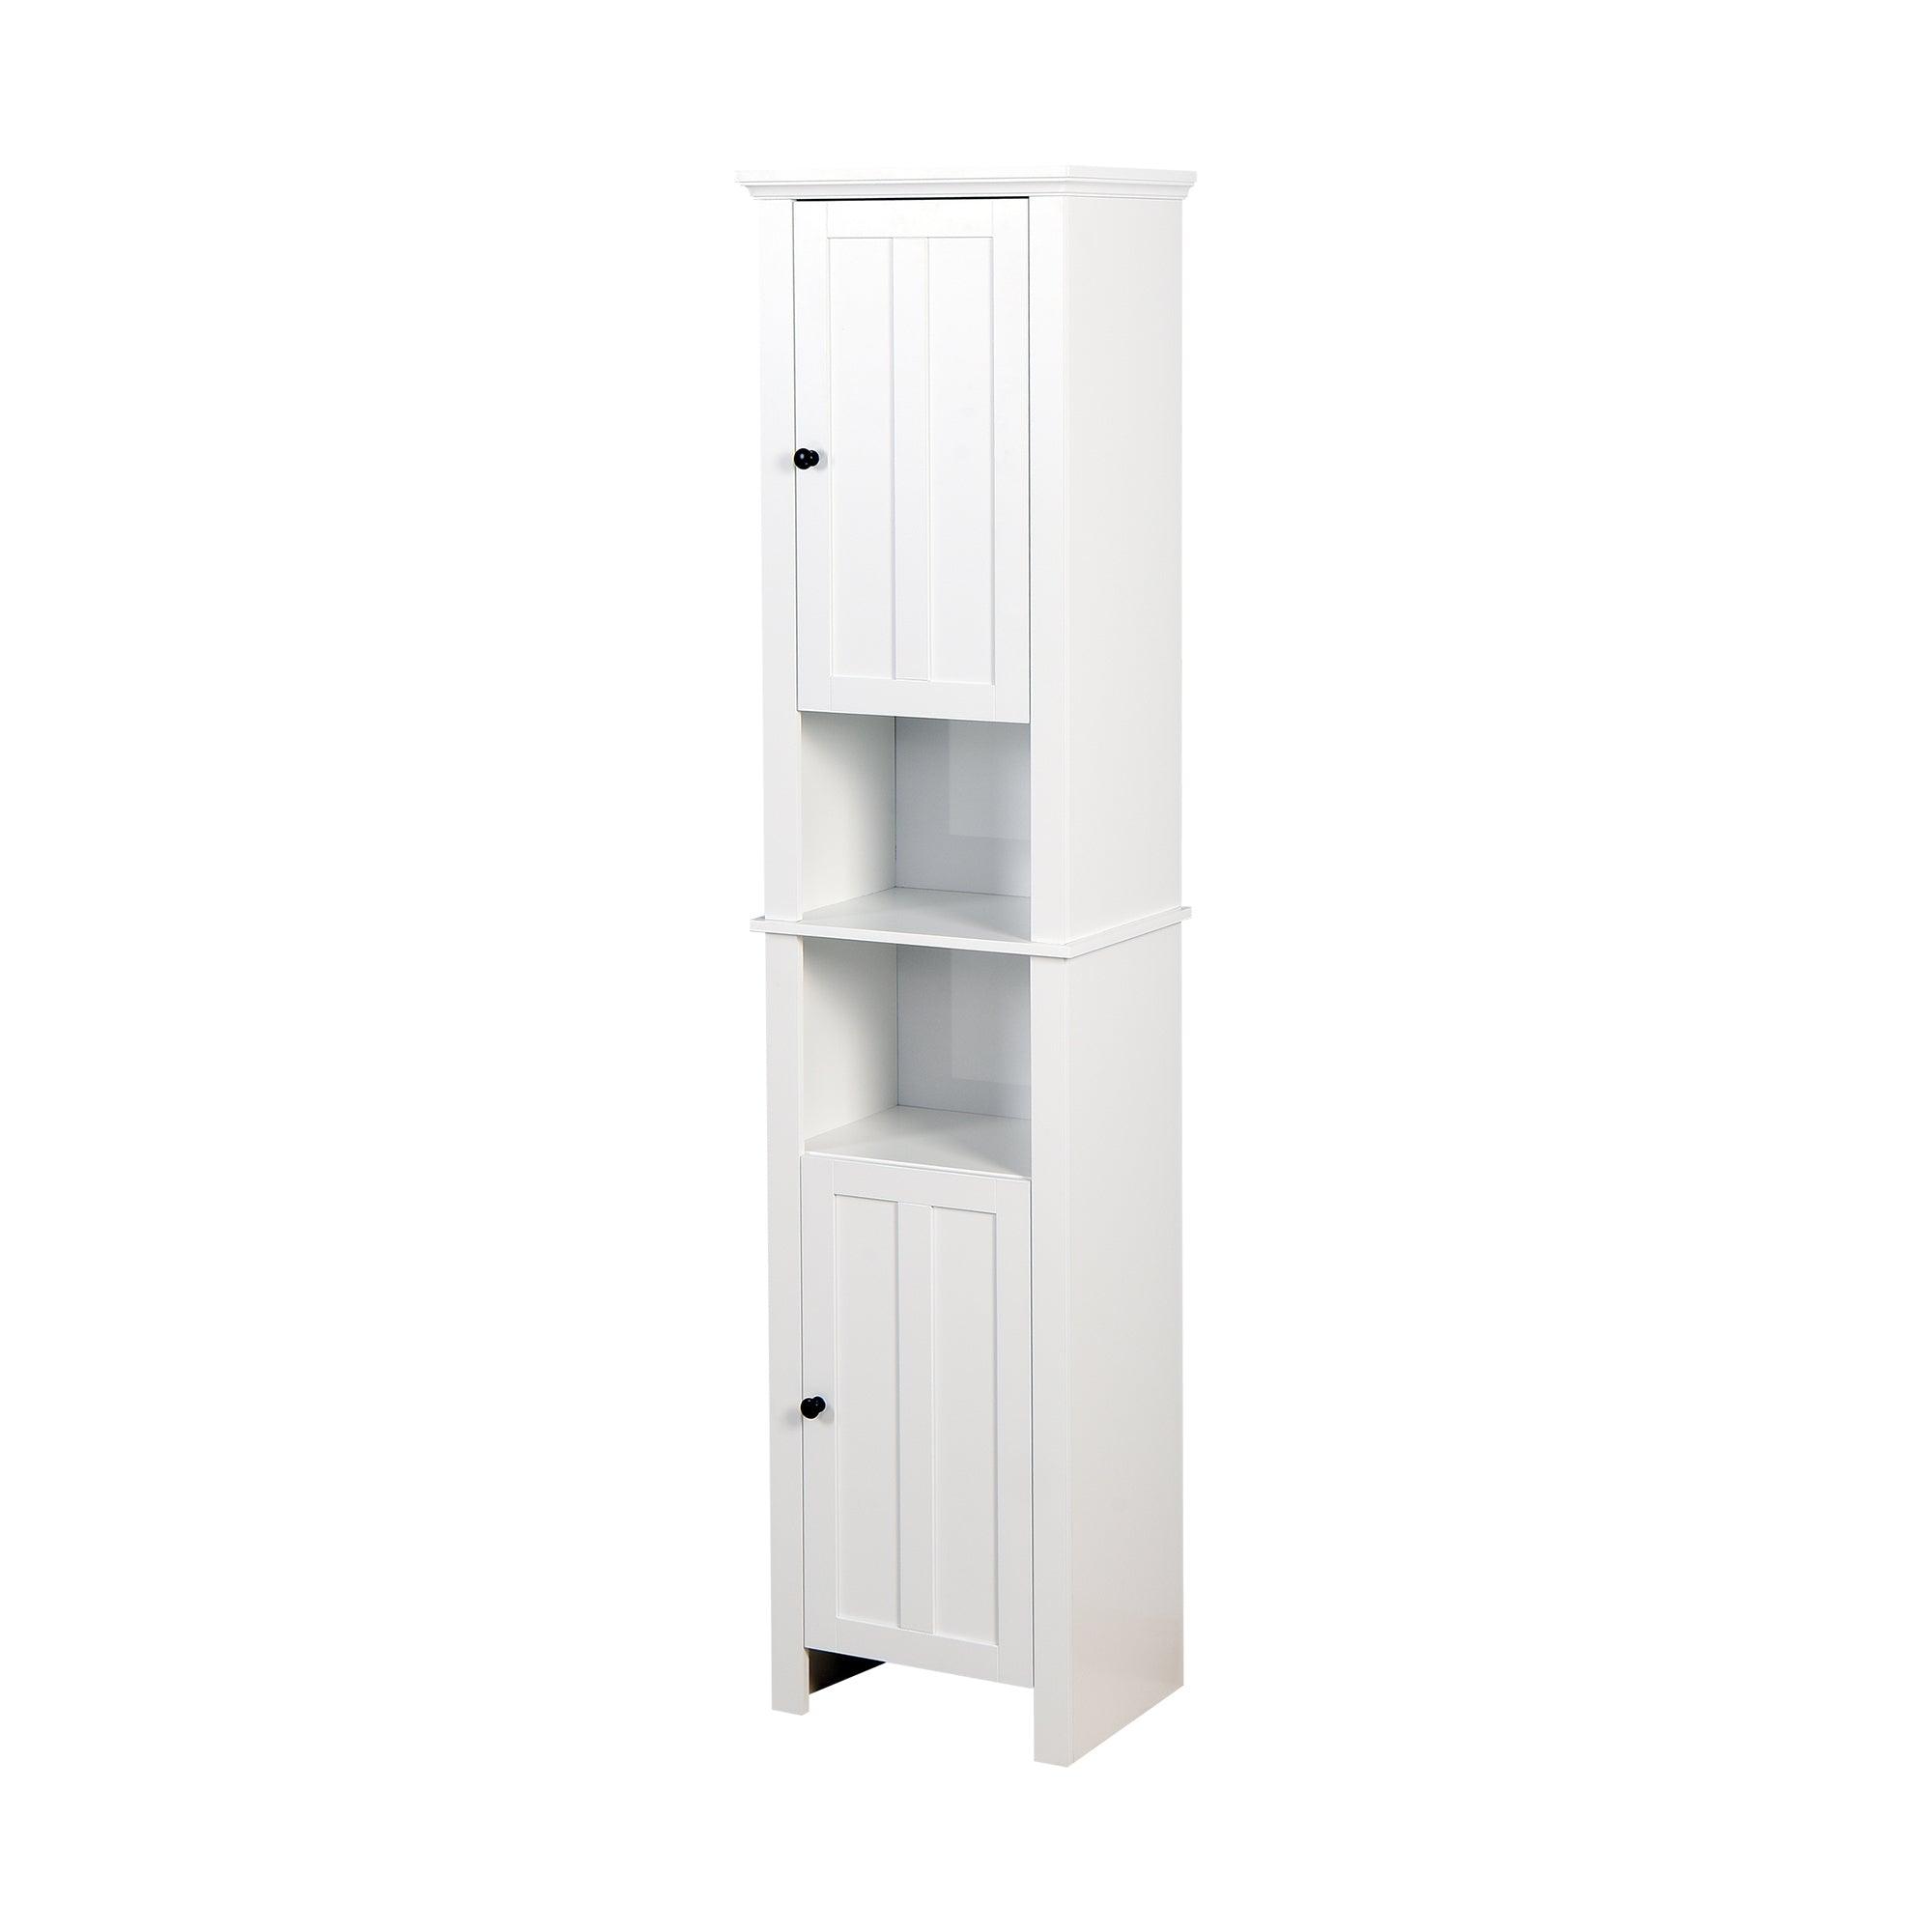 🆓🚛 Bathroom Floor Storage Cabinet With 2 Doors Living Room Wooden Cabinet With 6 Shelves 15.75 X 11.81 X 66.93 Inch